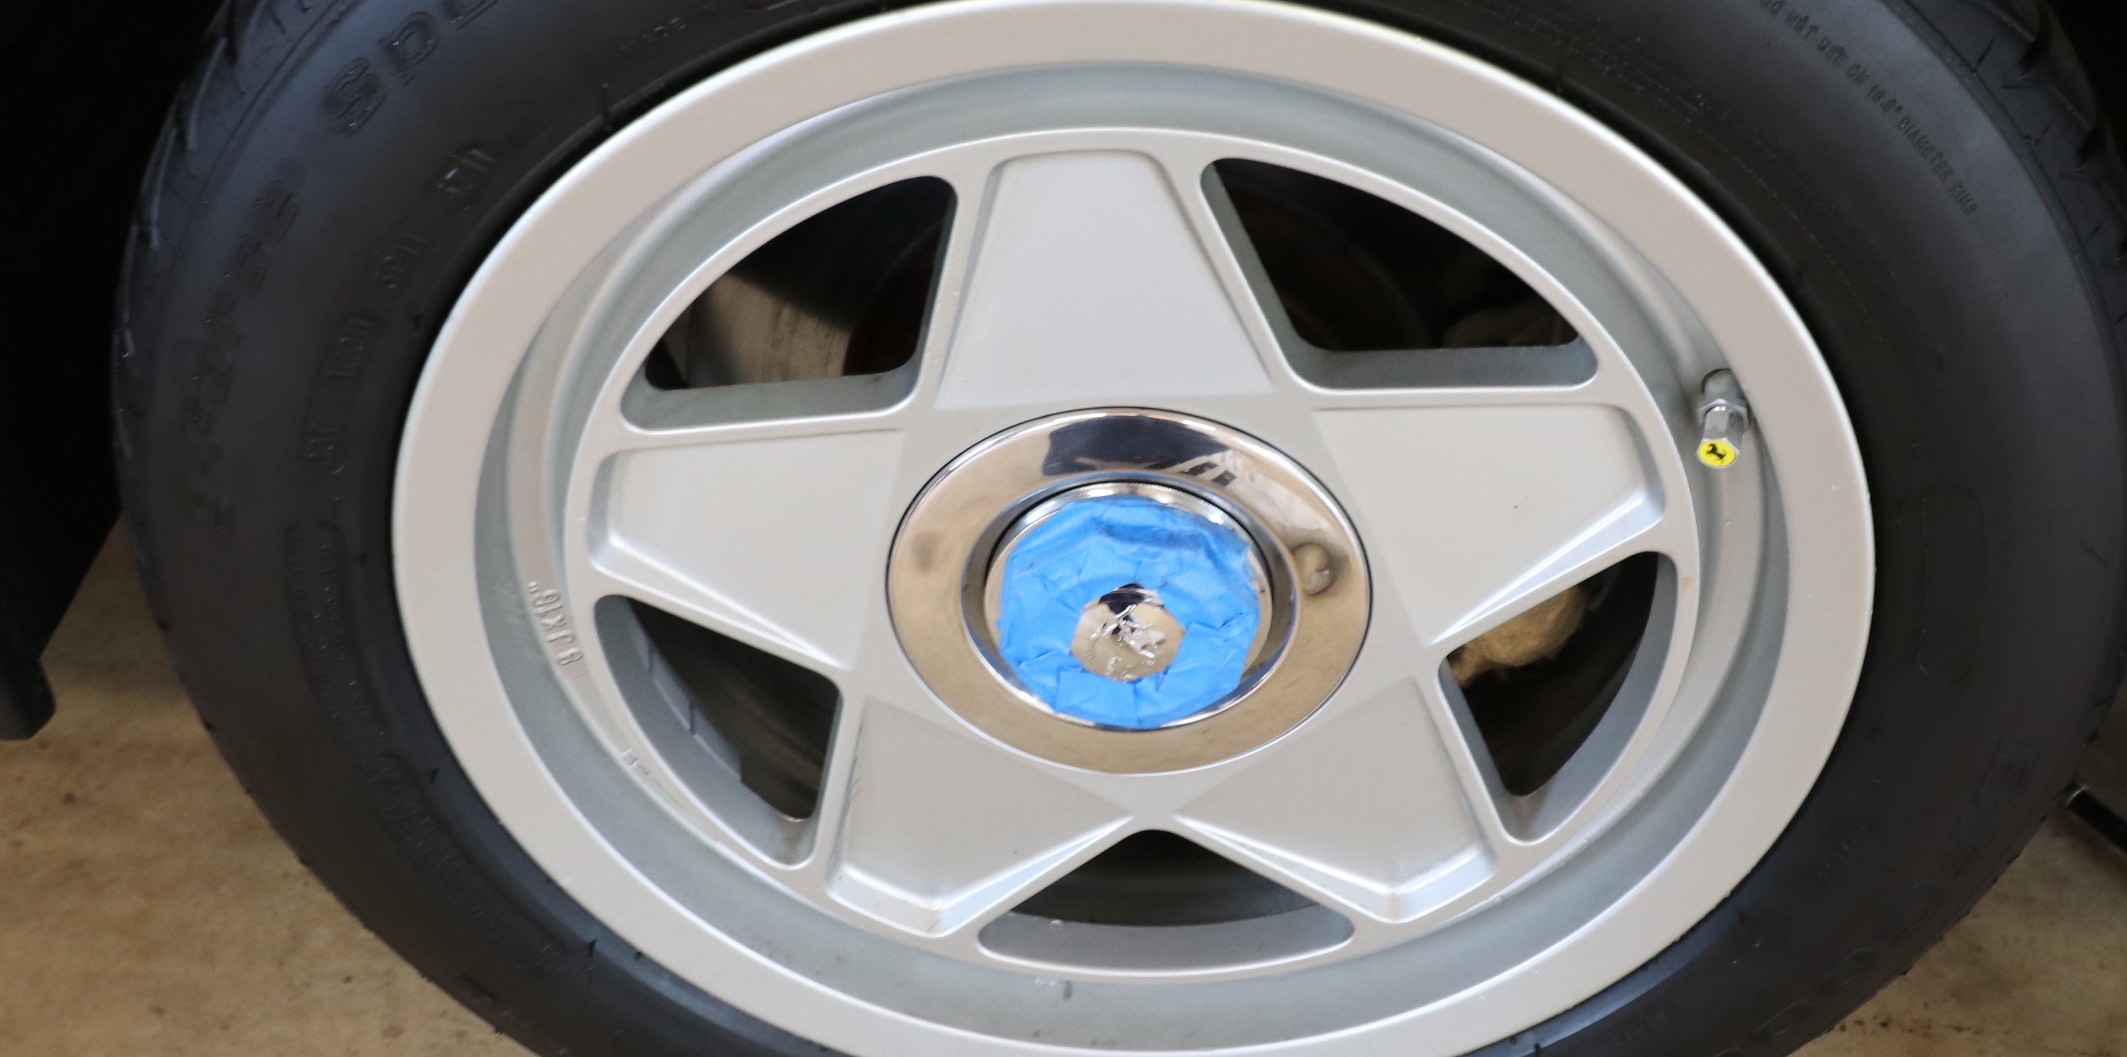 Ferrari Testarossa single wheel nut taped to prevent scratching of the wheel nut